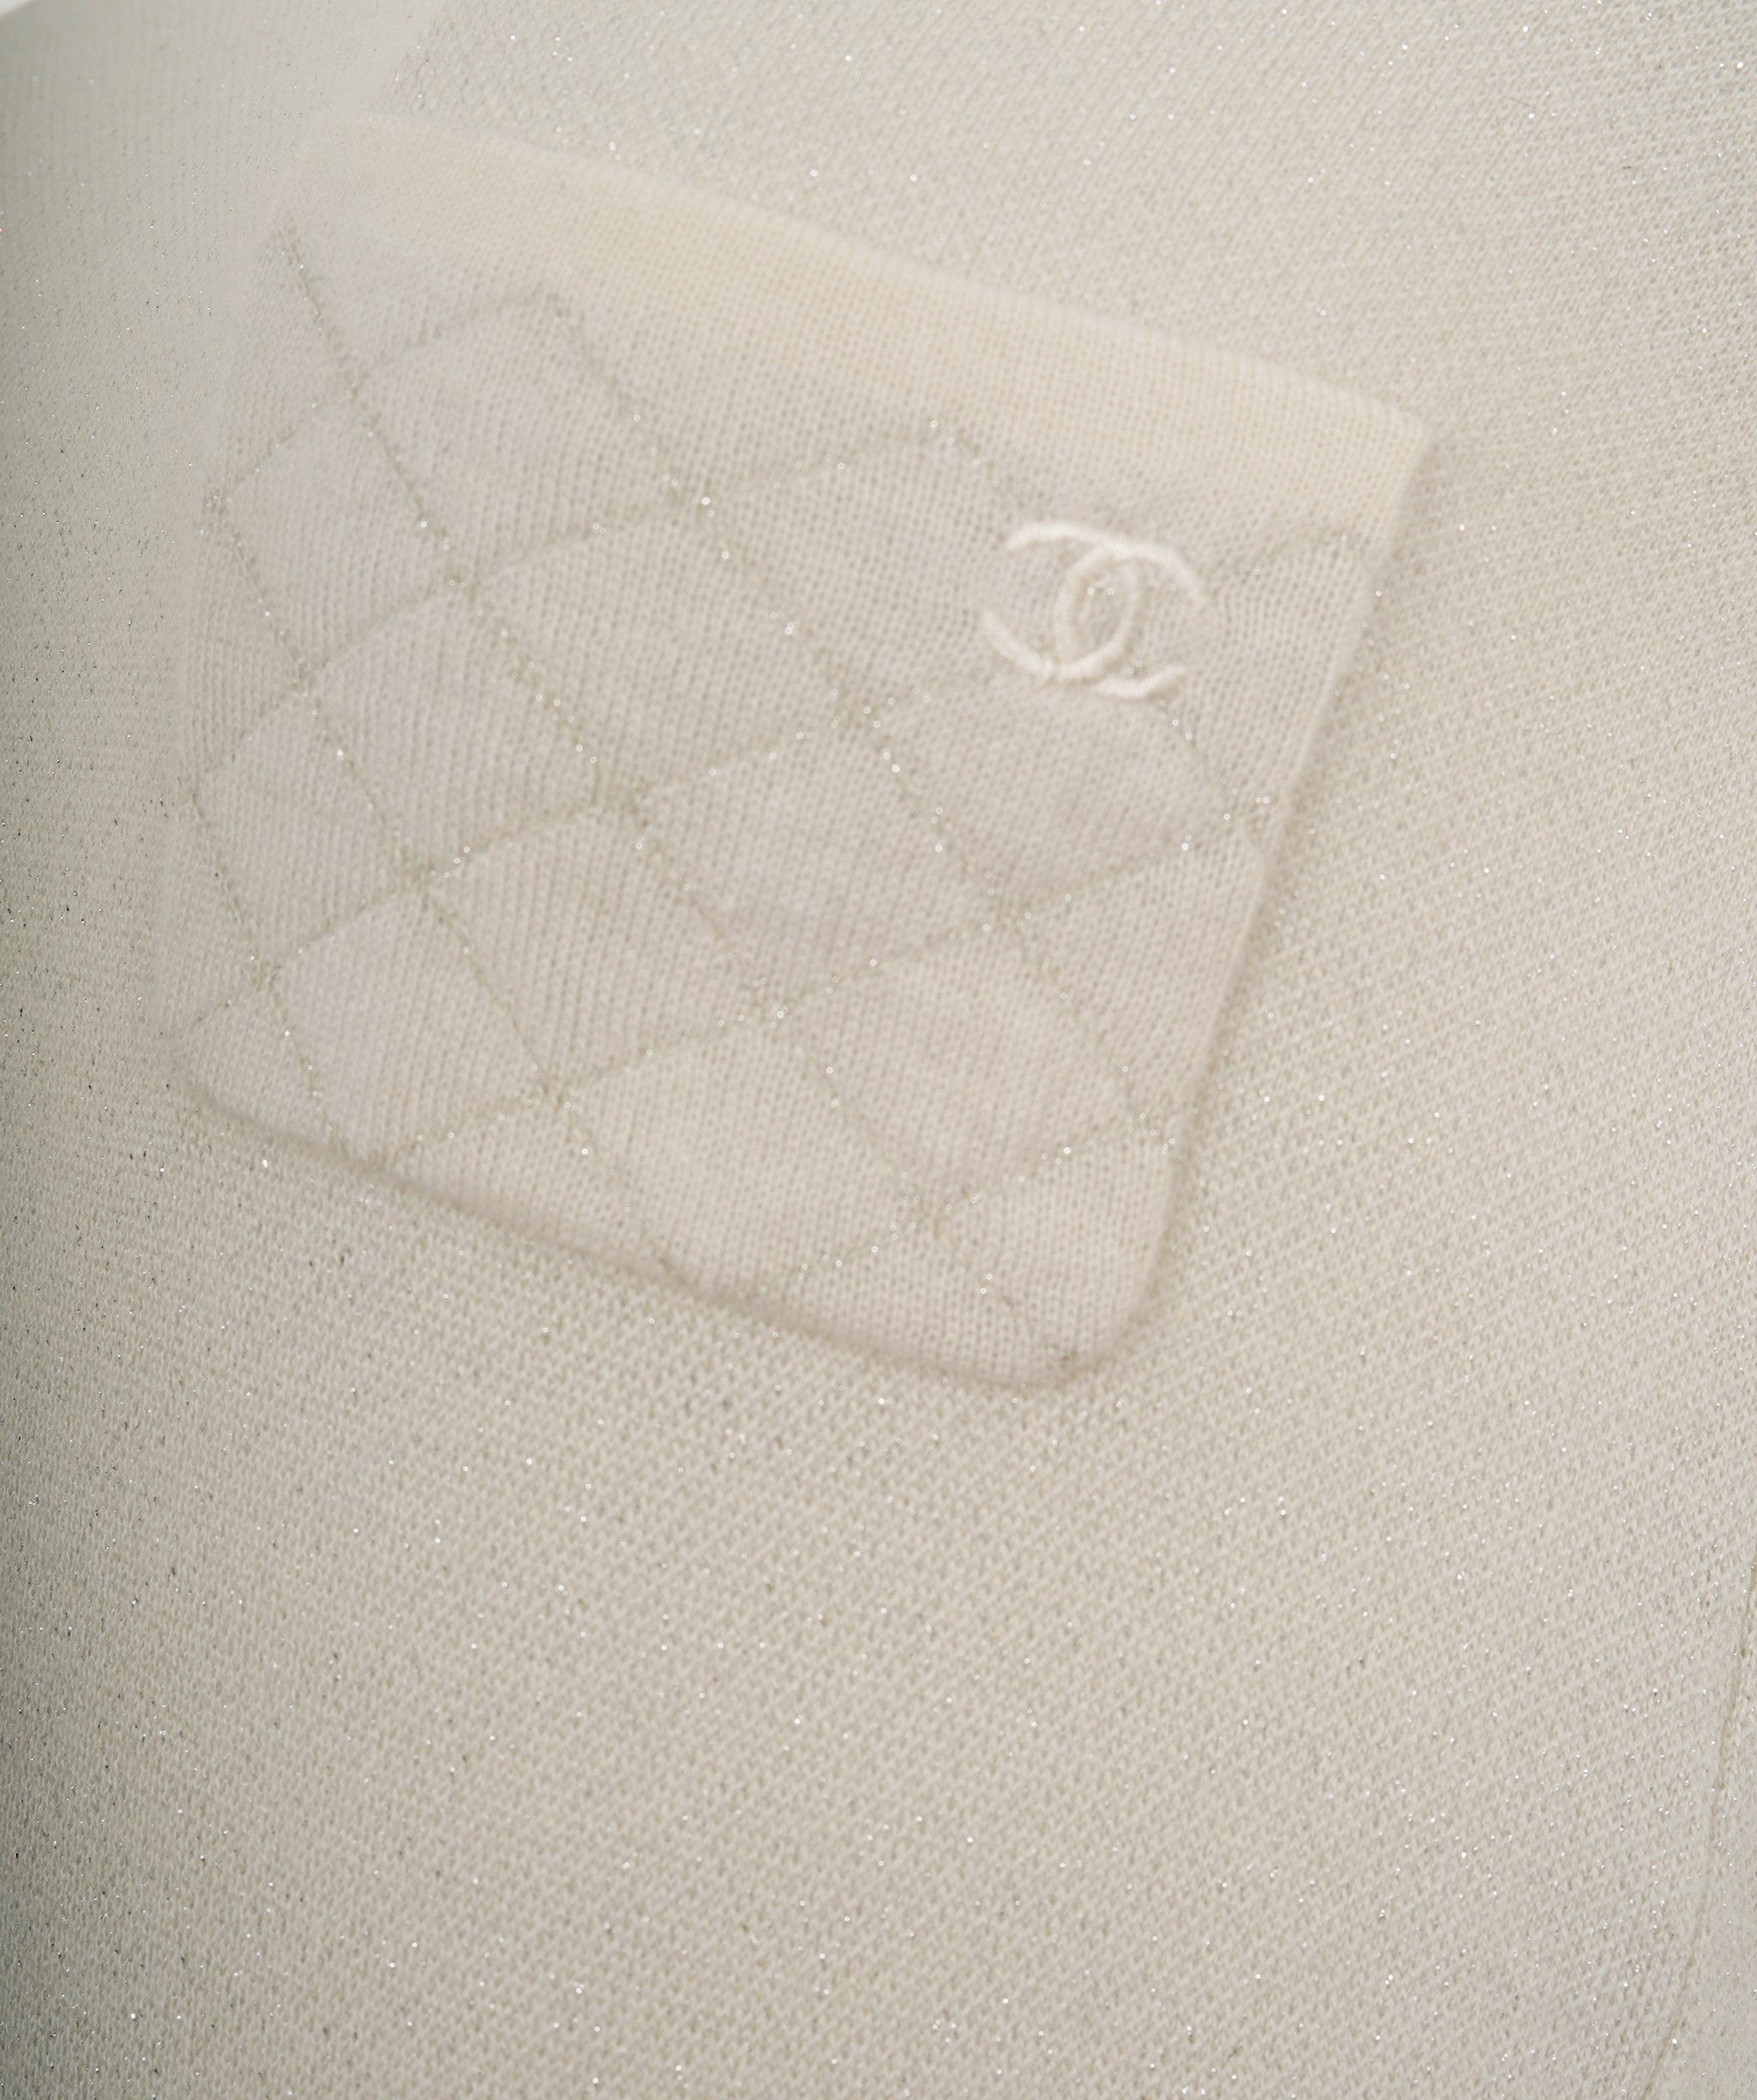 Chanel Chanel 06A Pocket Cashmere Top Cream ASL8239